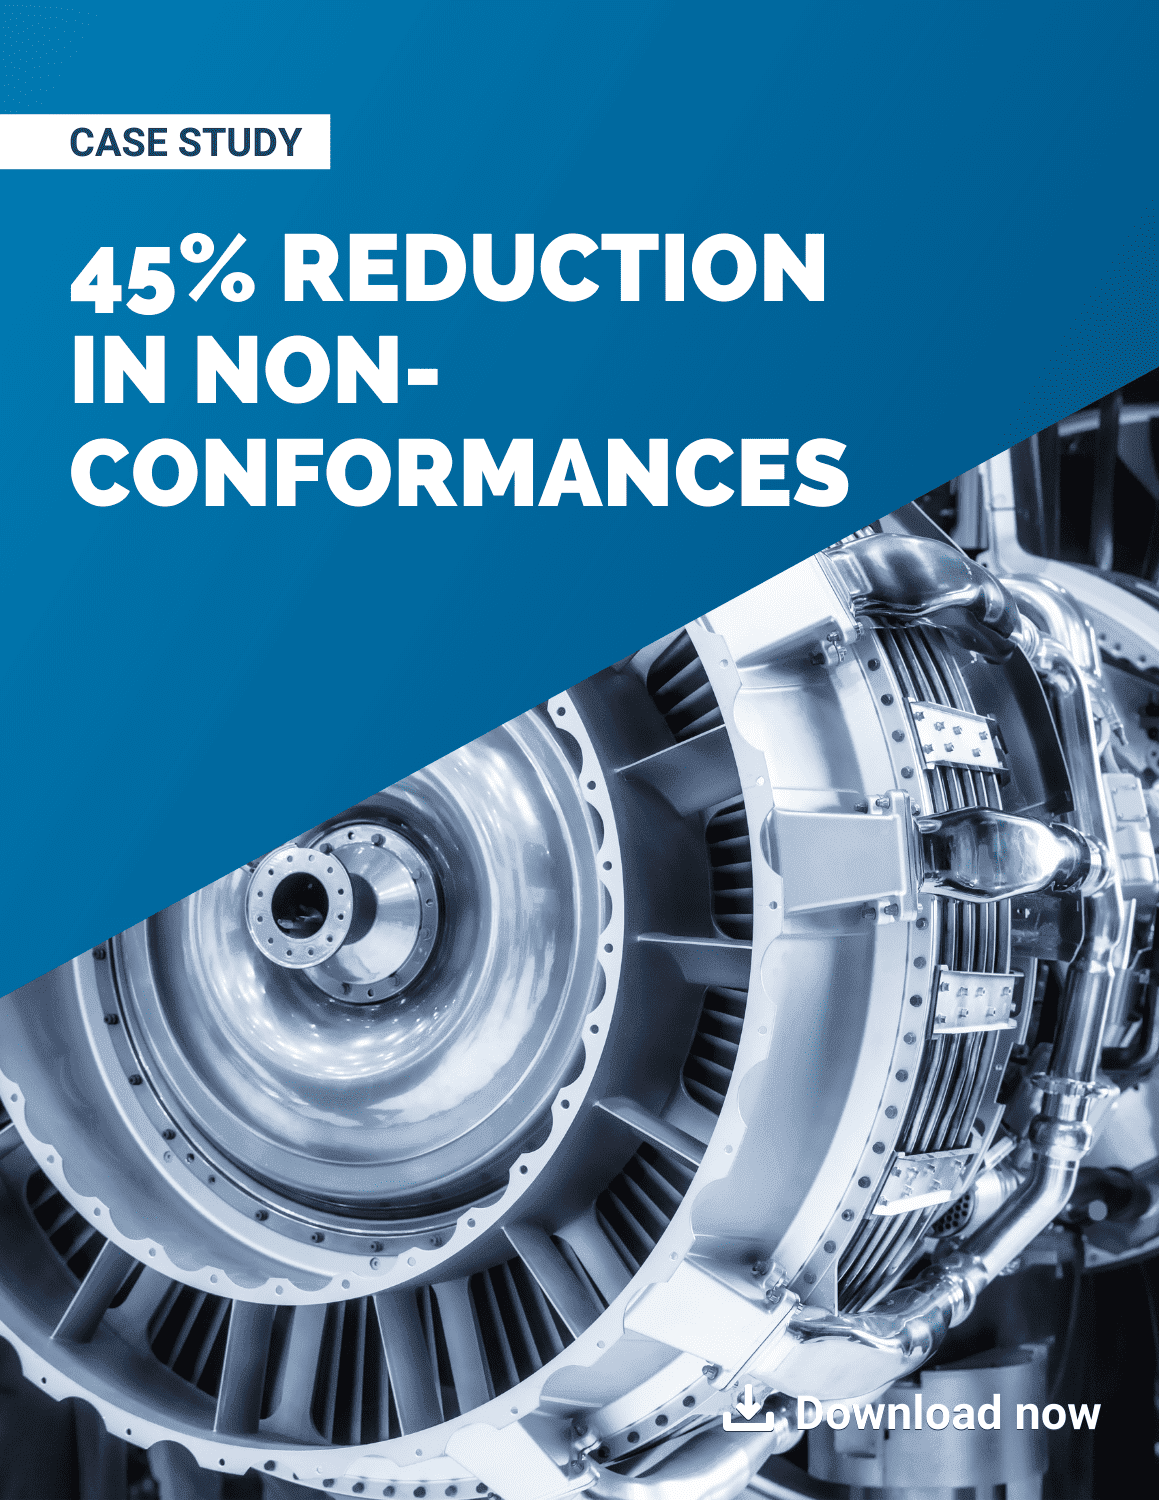 45% reduction in non-conformances